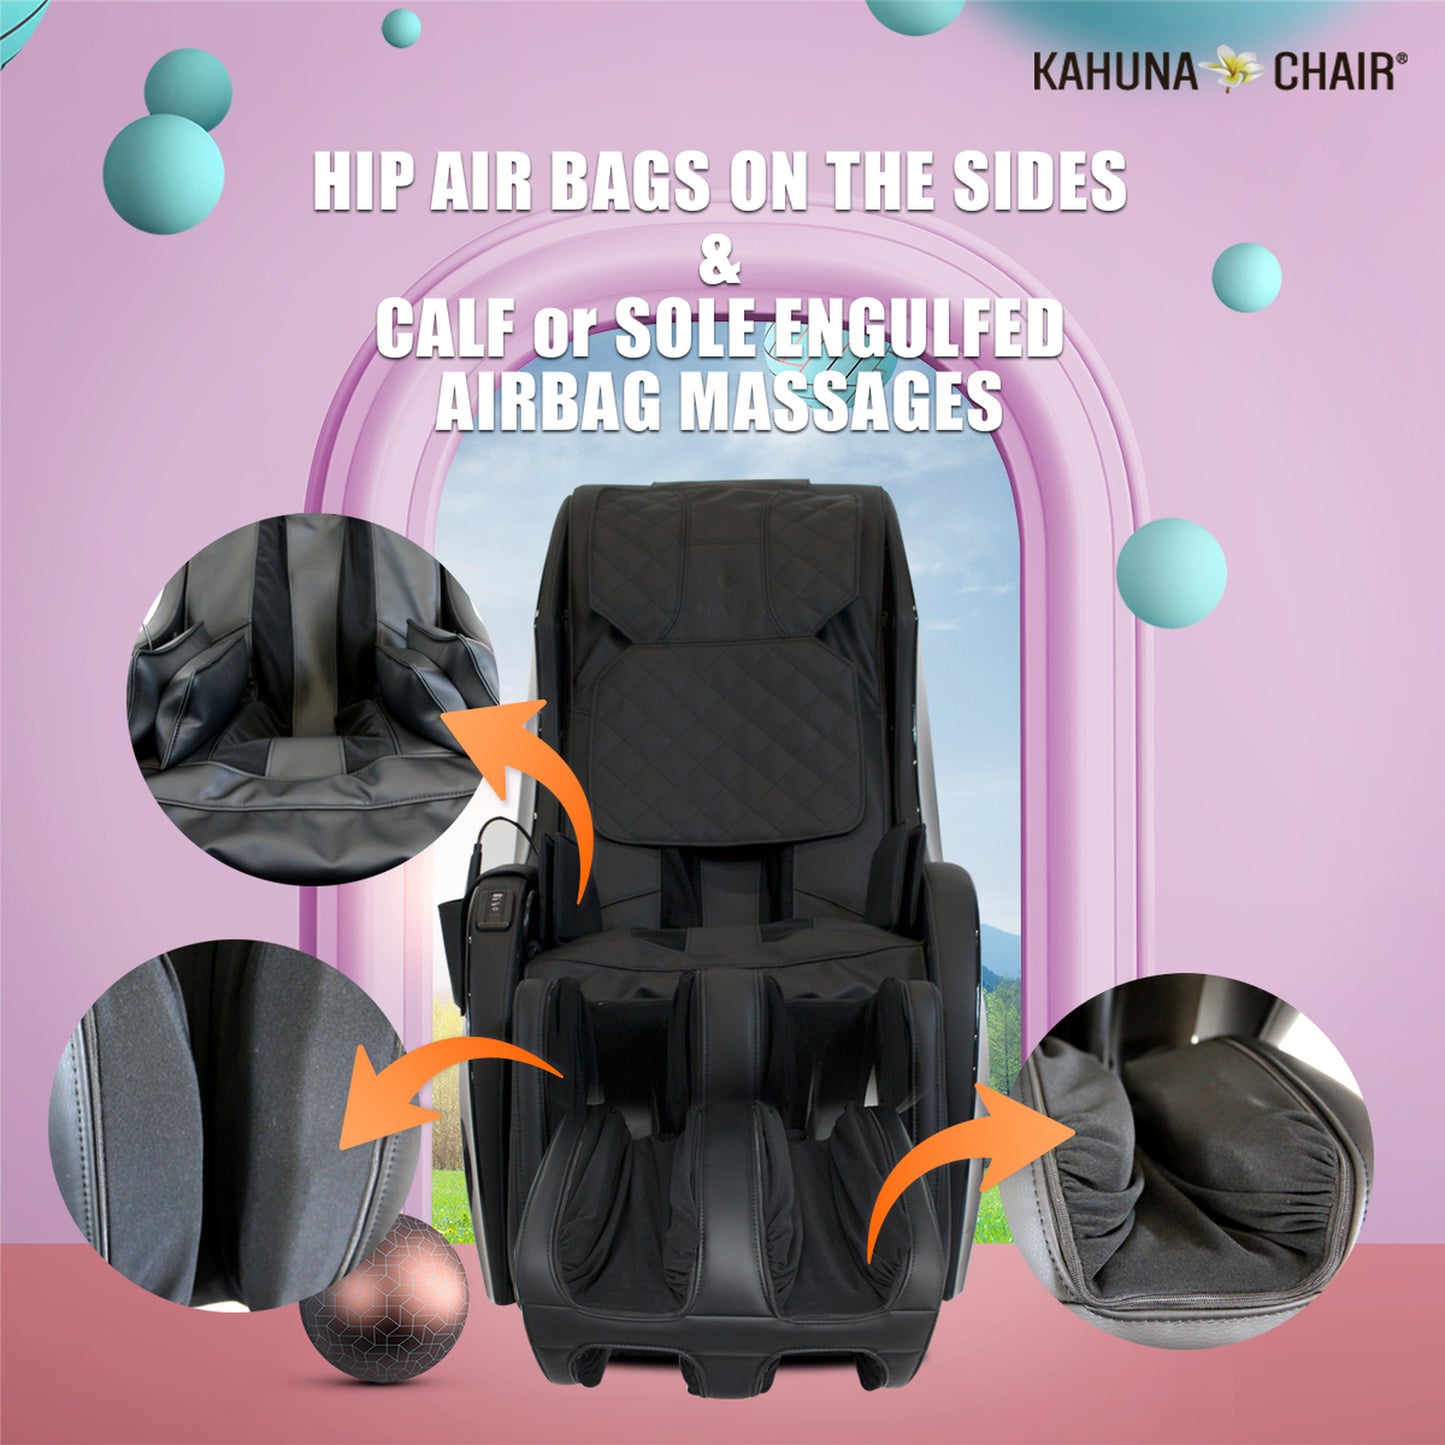 Kahuna HM-5000 Slender Style SL-Track Massage Chair